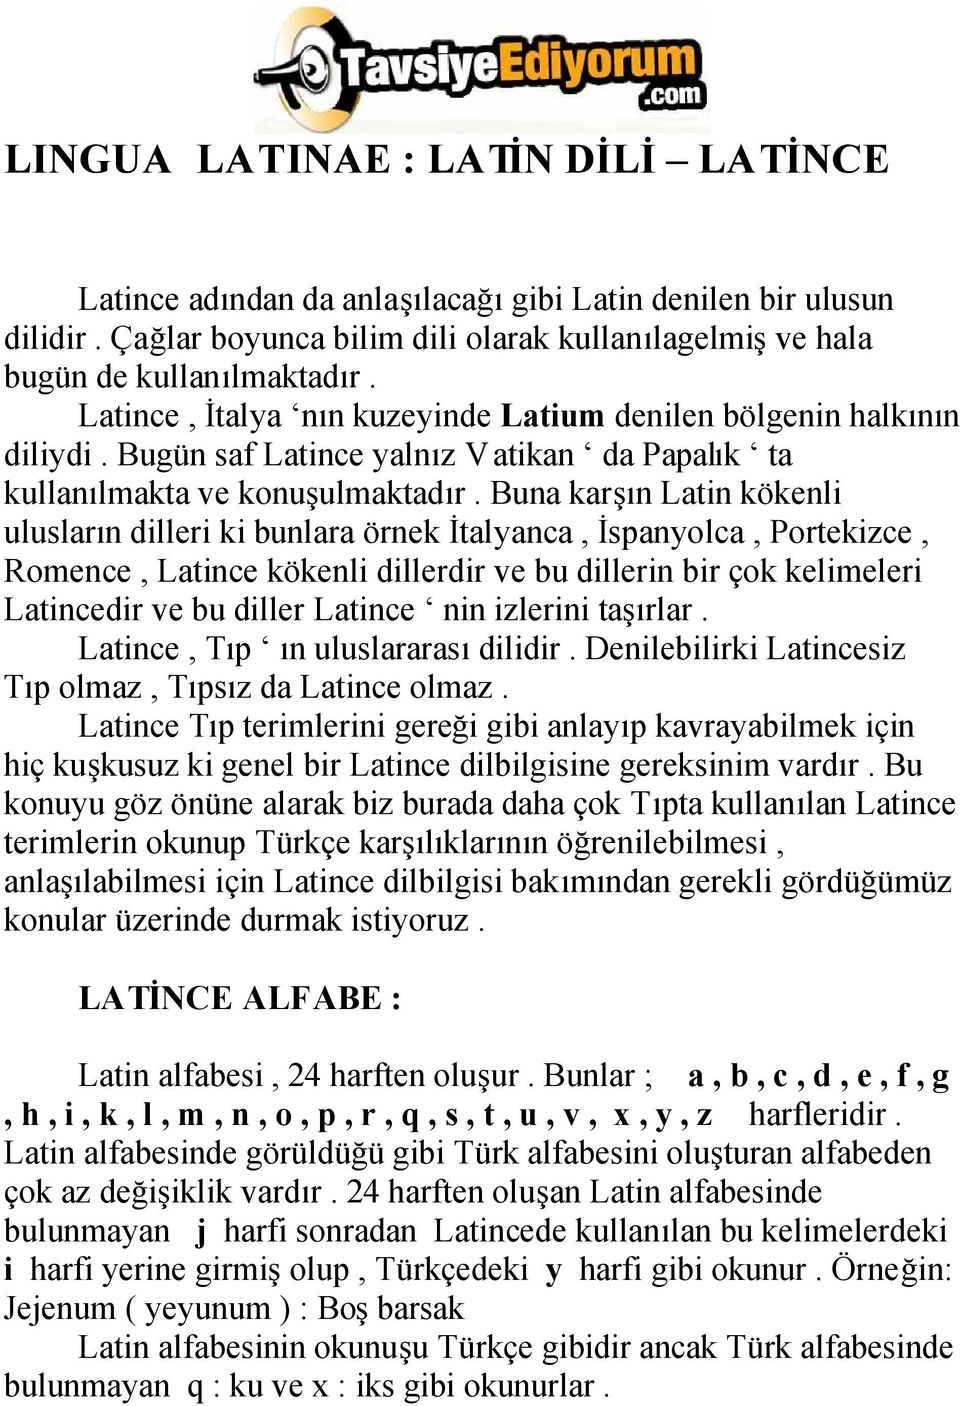 Lingua Latinae Latin Dili Latince Pdf Ucretsiz Indirin